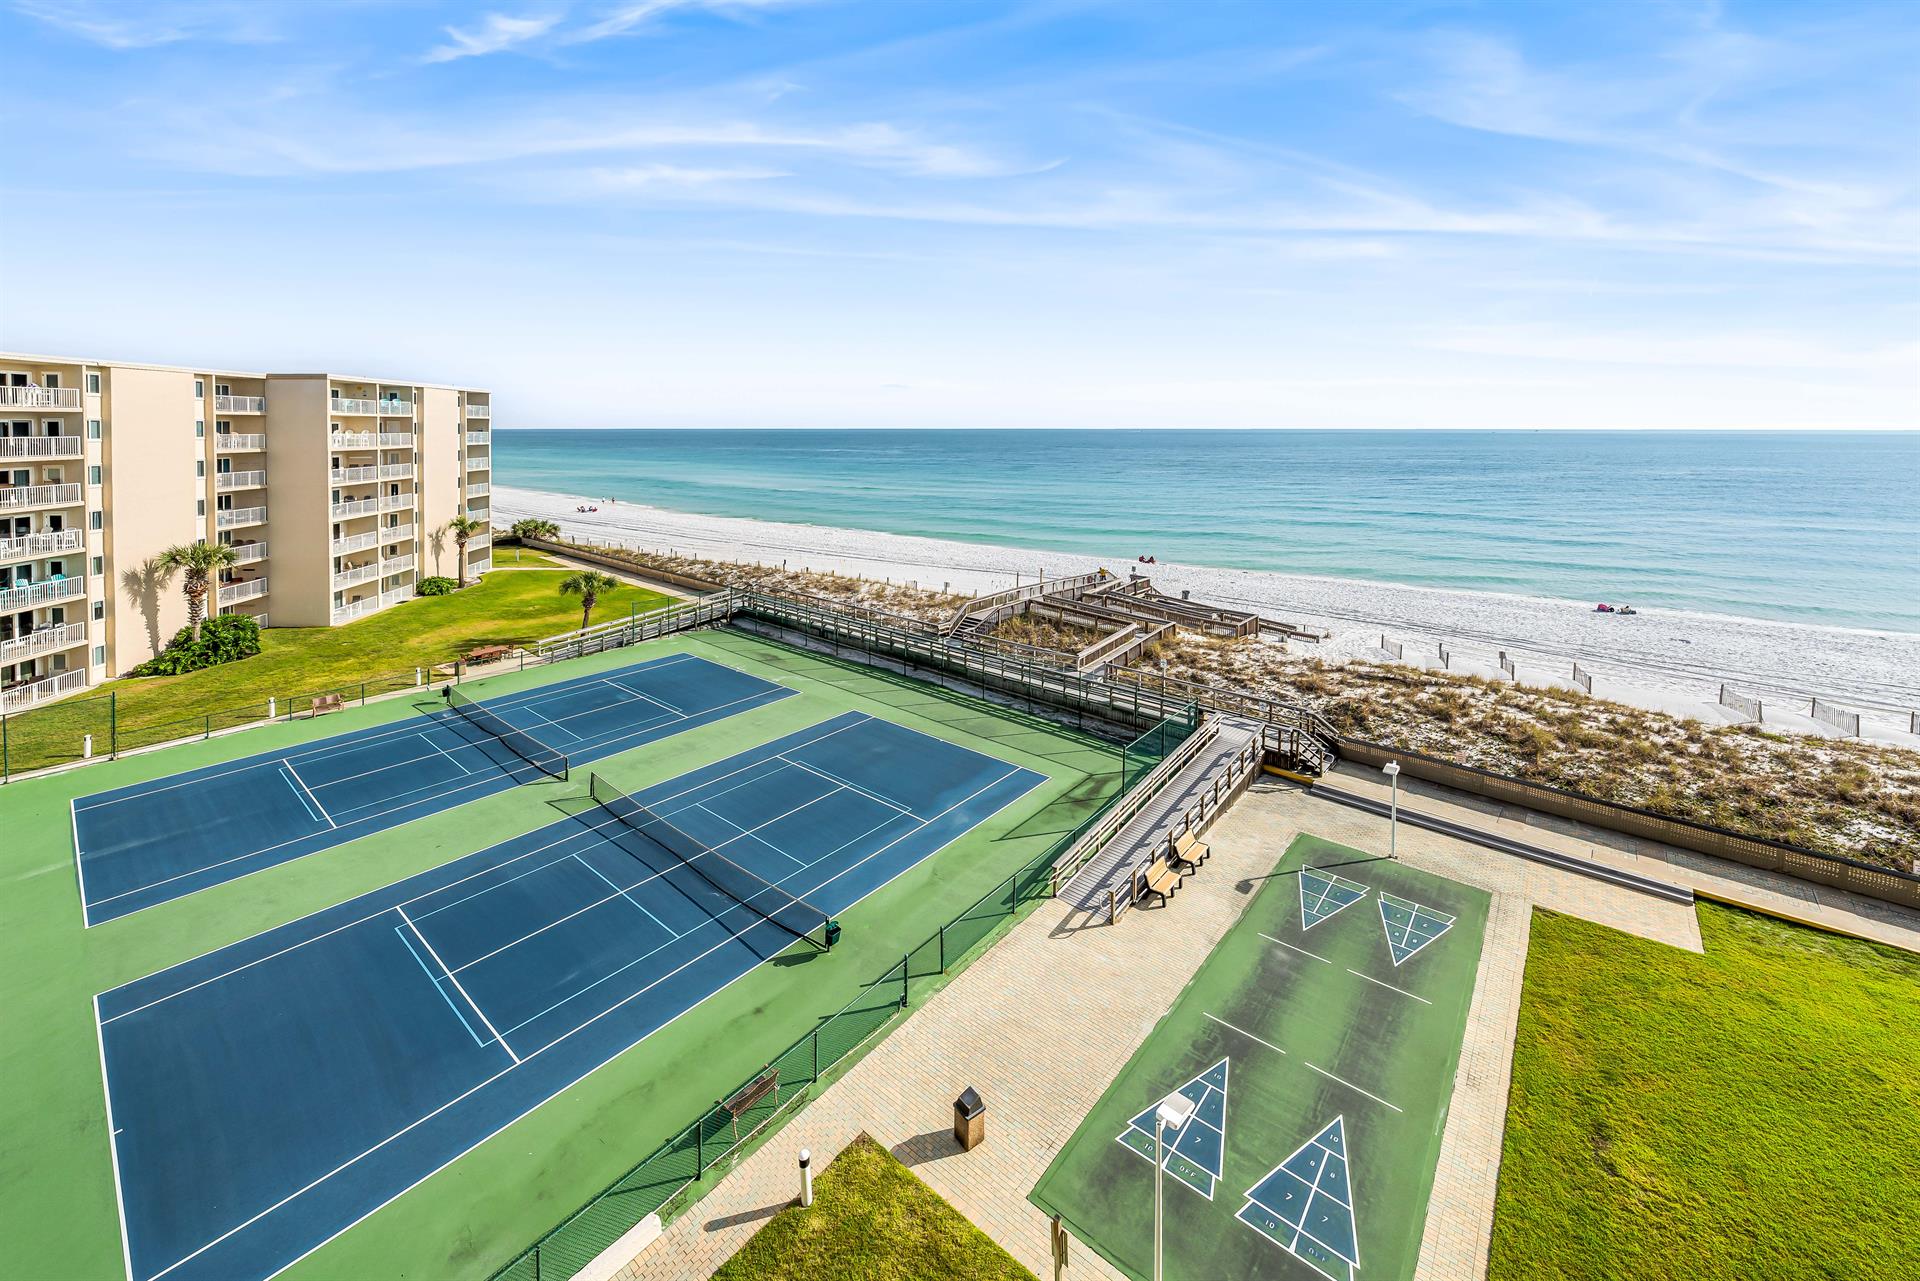 HSRC Tennis Court And Beach View